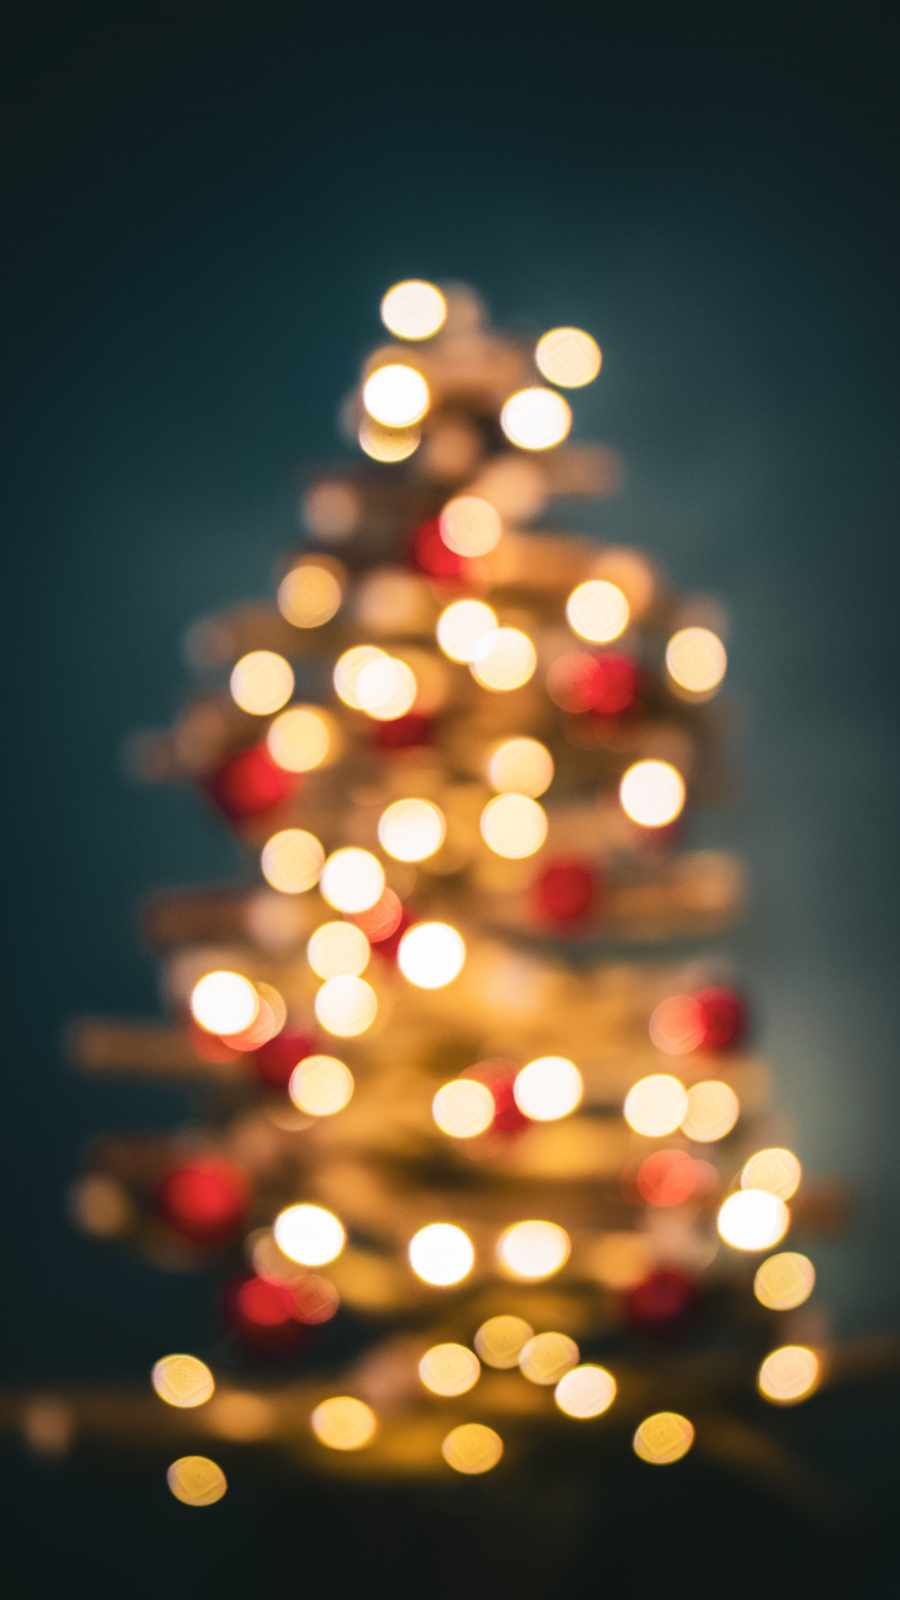 Bokeh Christmas Tree iPhone Wallpaper